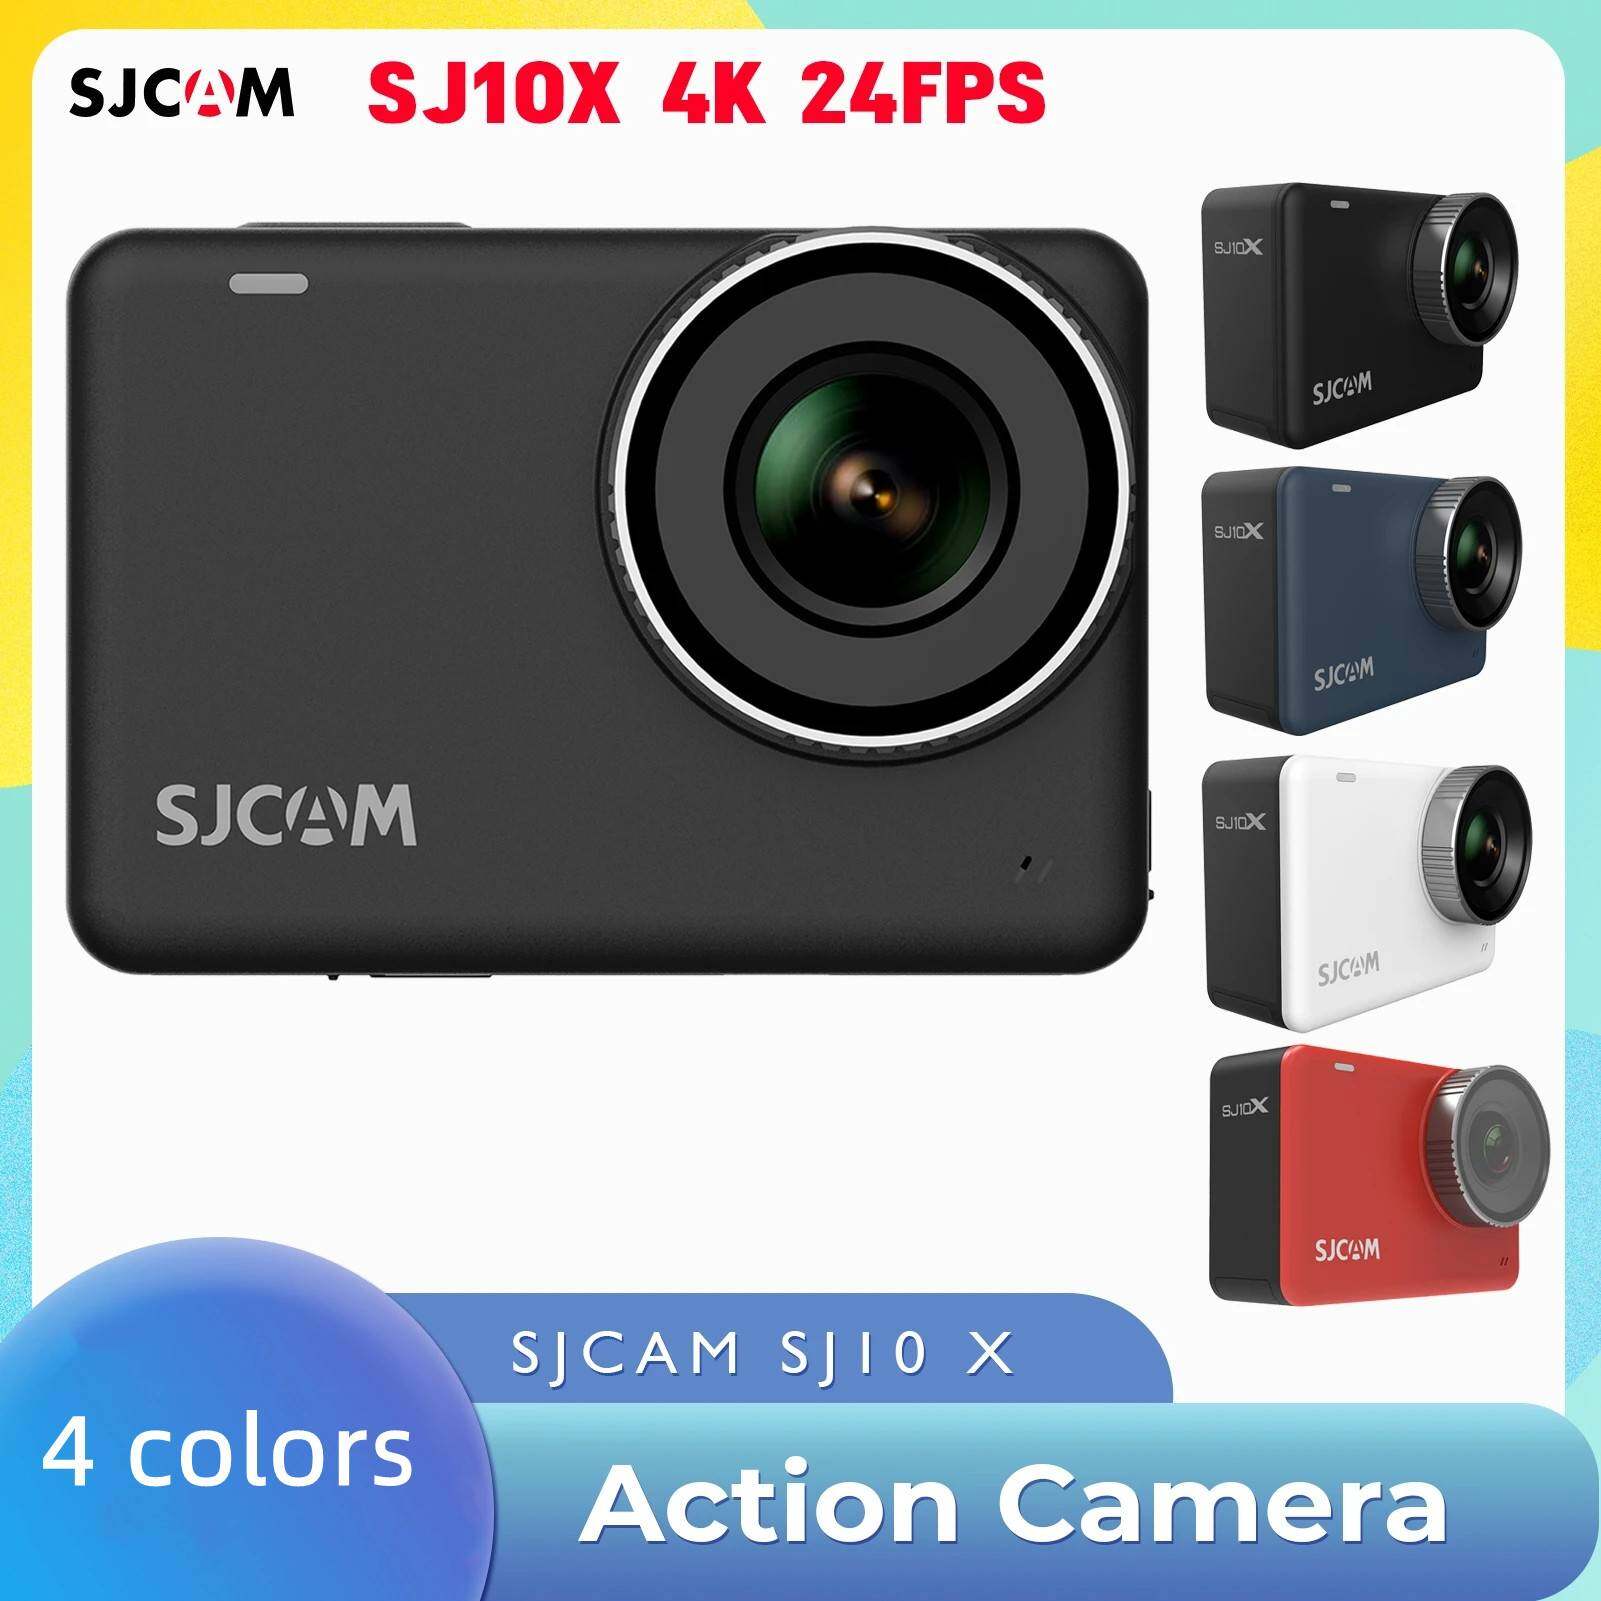 SJCAM SJ10X Action Camera SJ10 X 4K 24FPS 10M Body Waterproof WiFi 2.33 Touch Screen Gyro Stabilization LIVE STREAMING DV